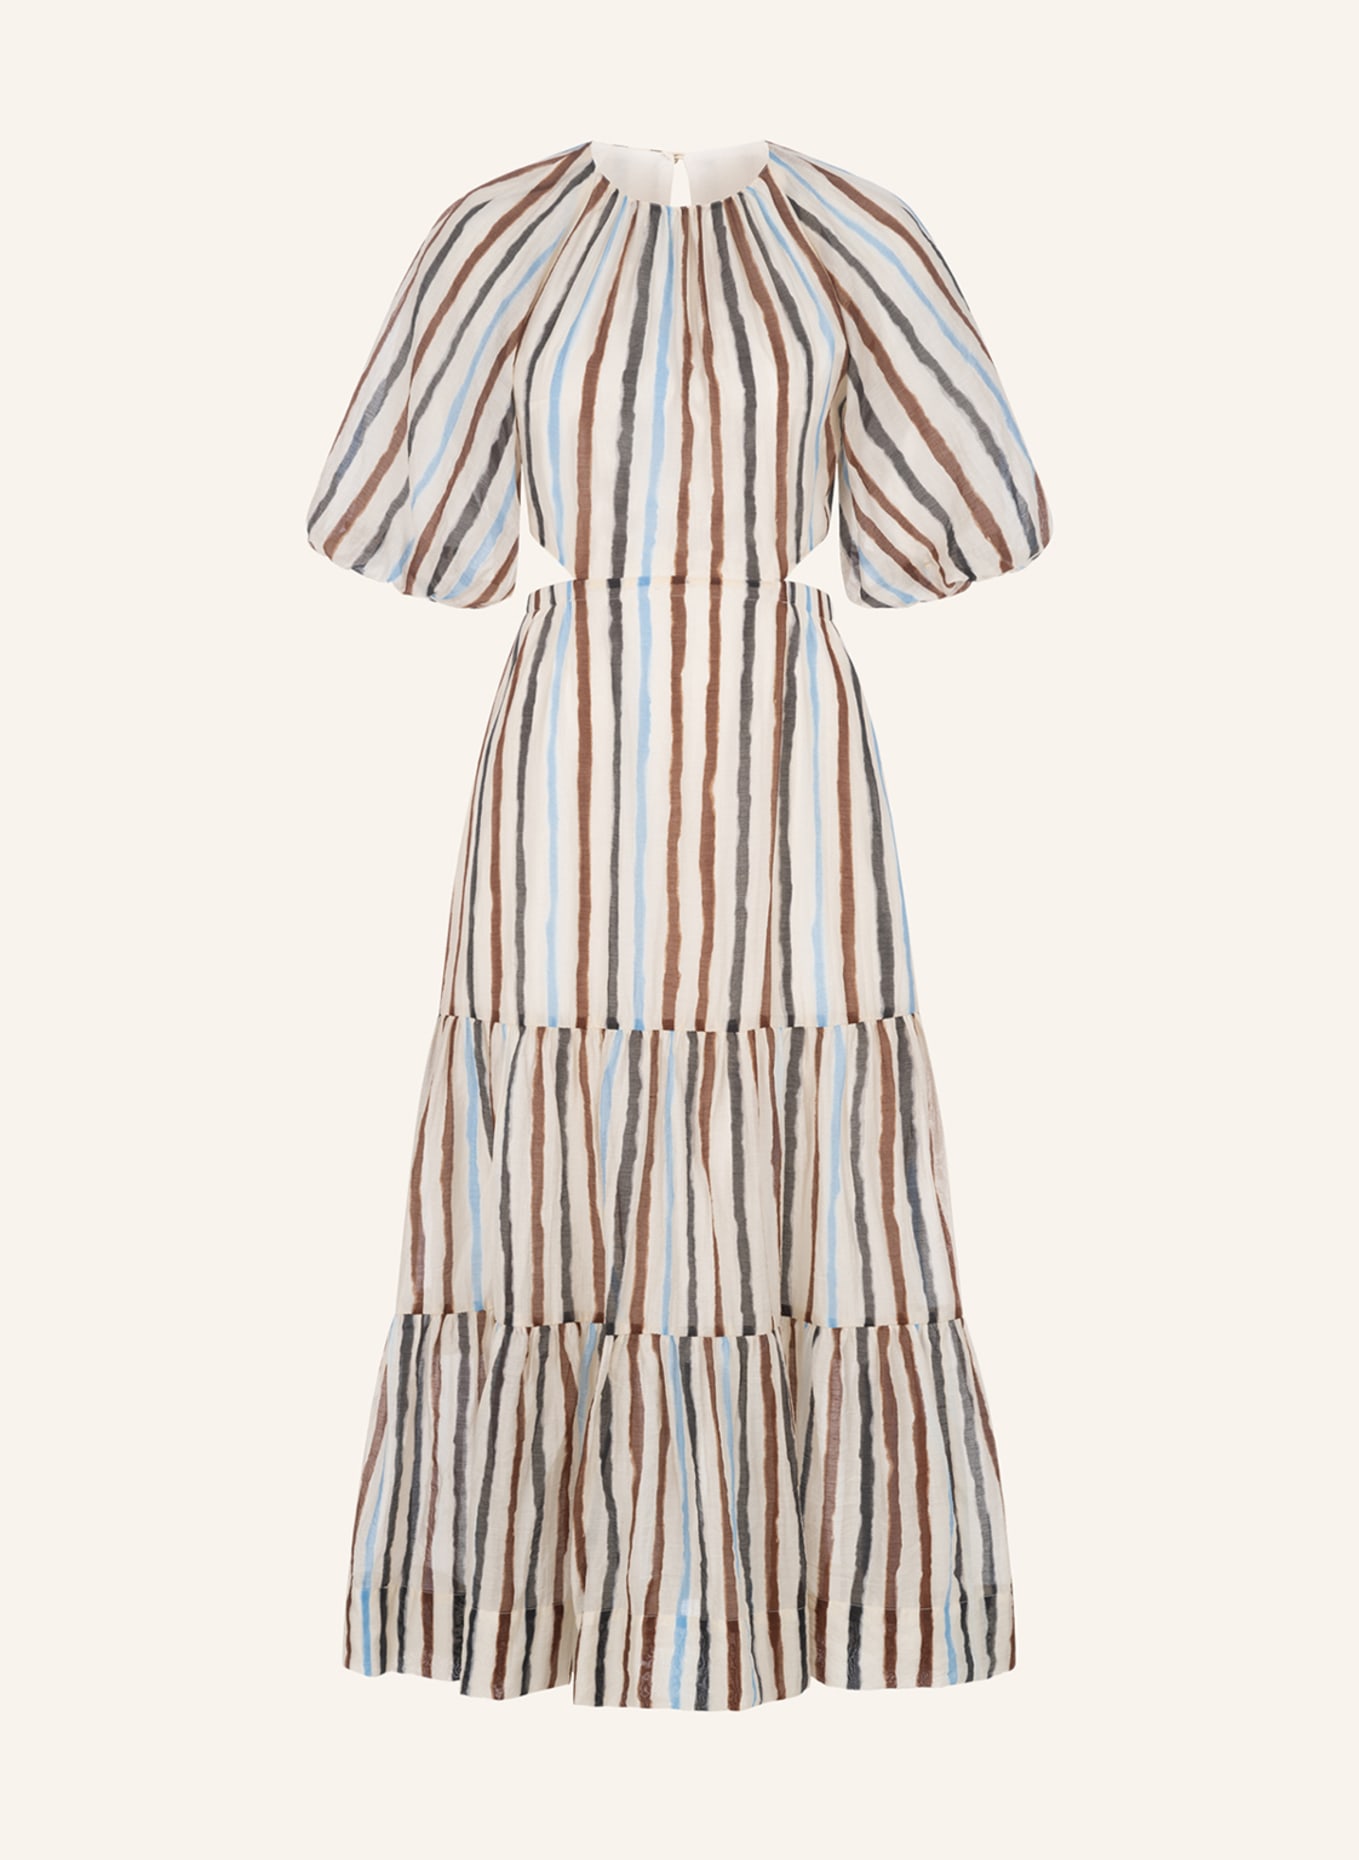 CLAIRE LUISE Kleid, Farbe: BLAU (Bild 1)